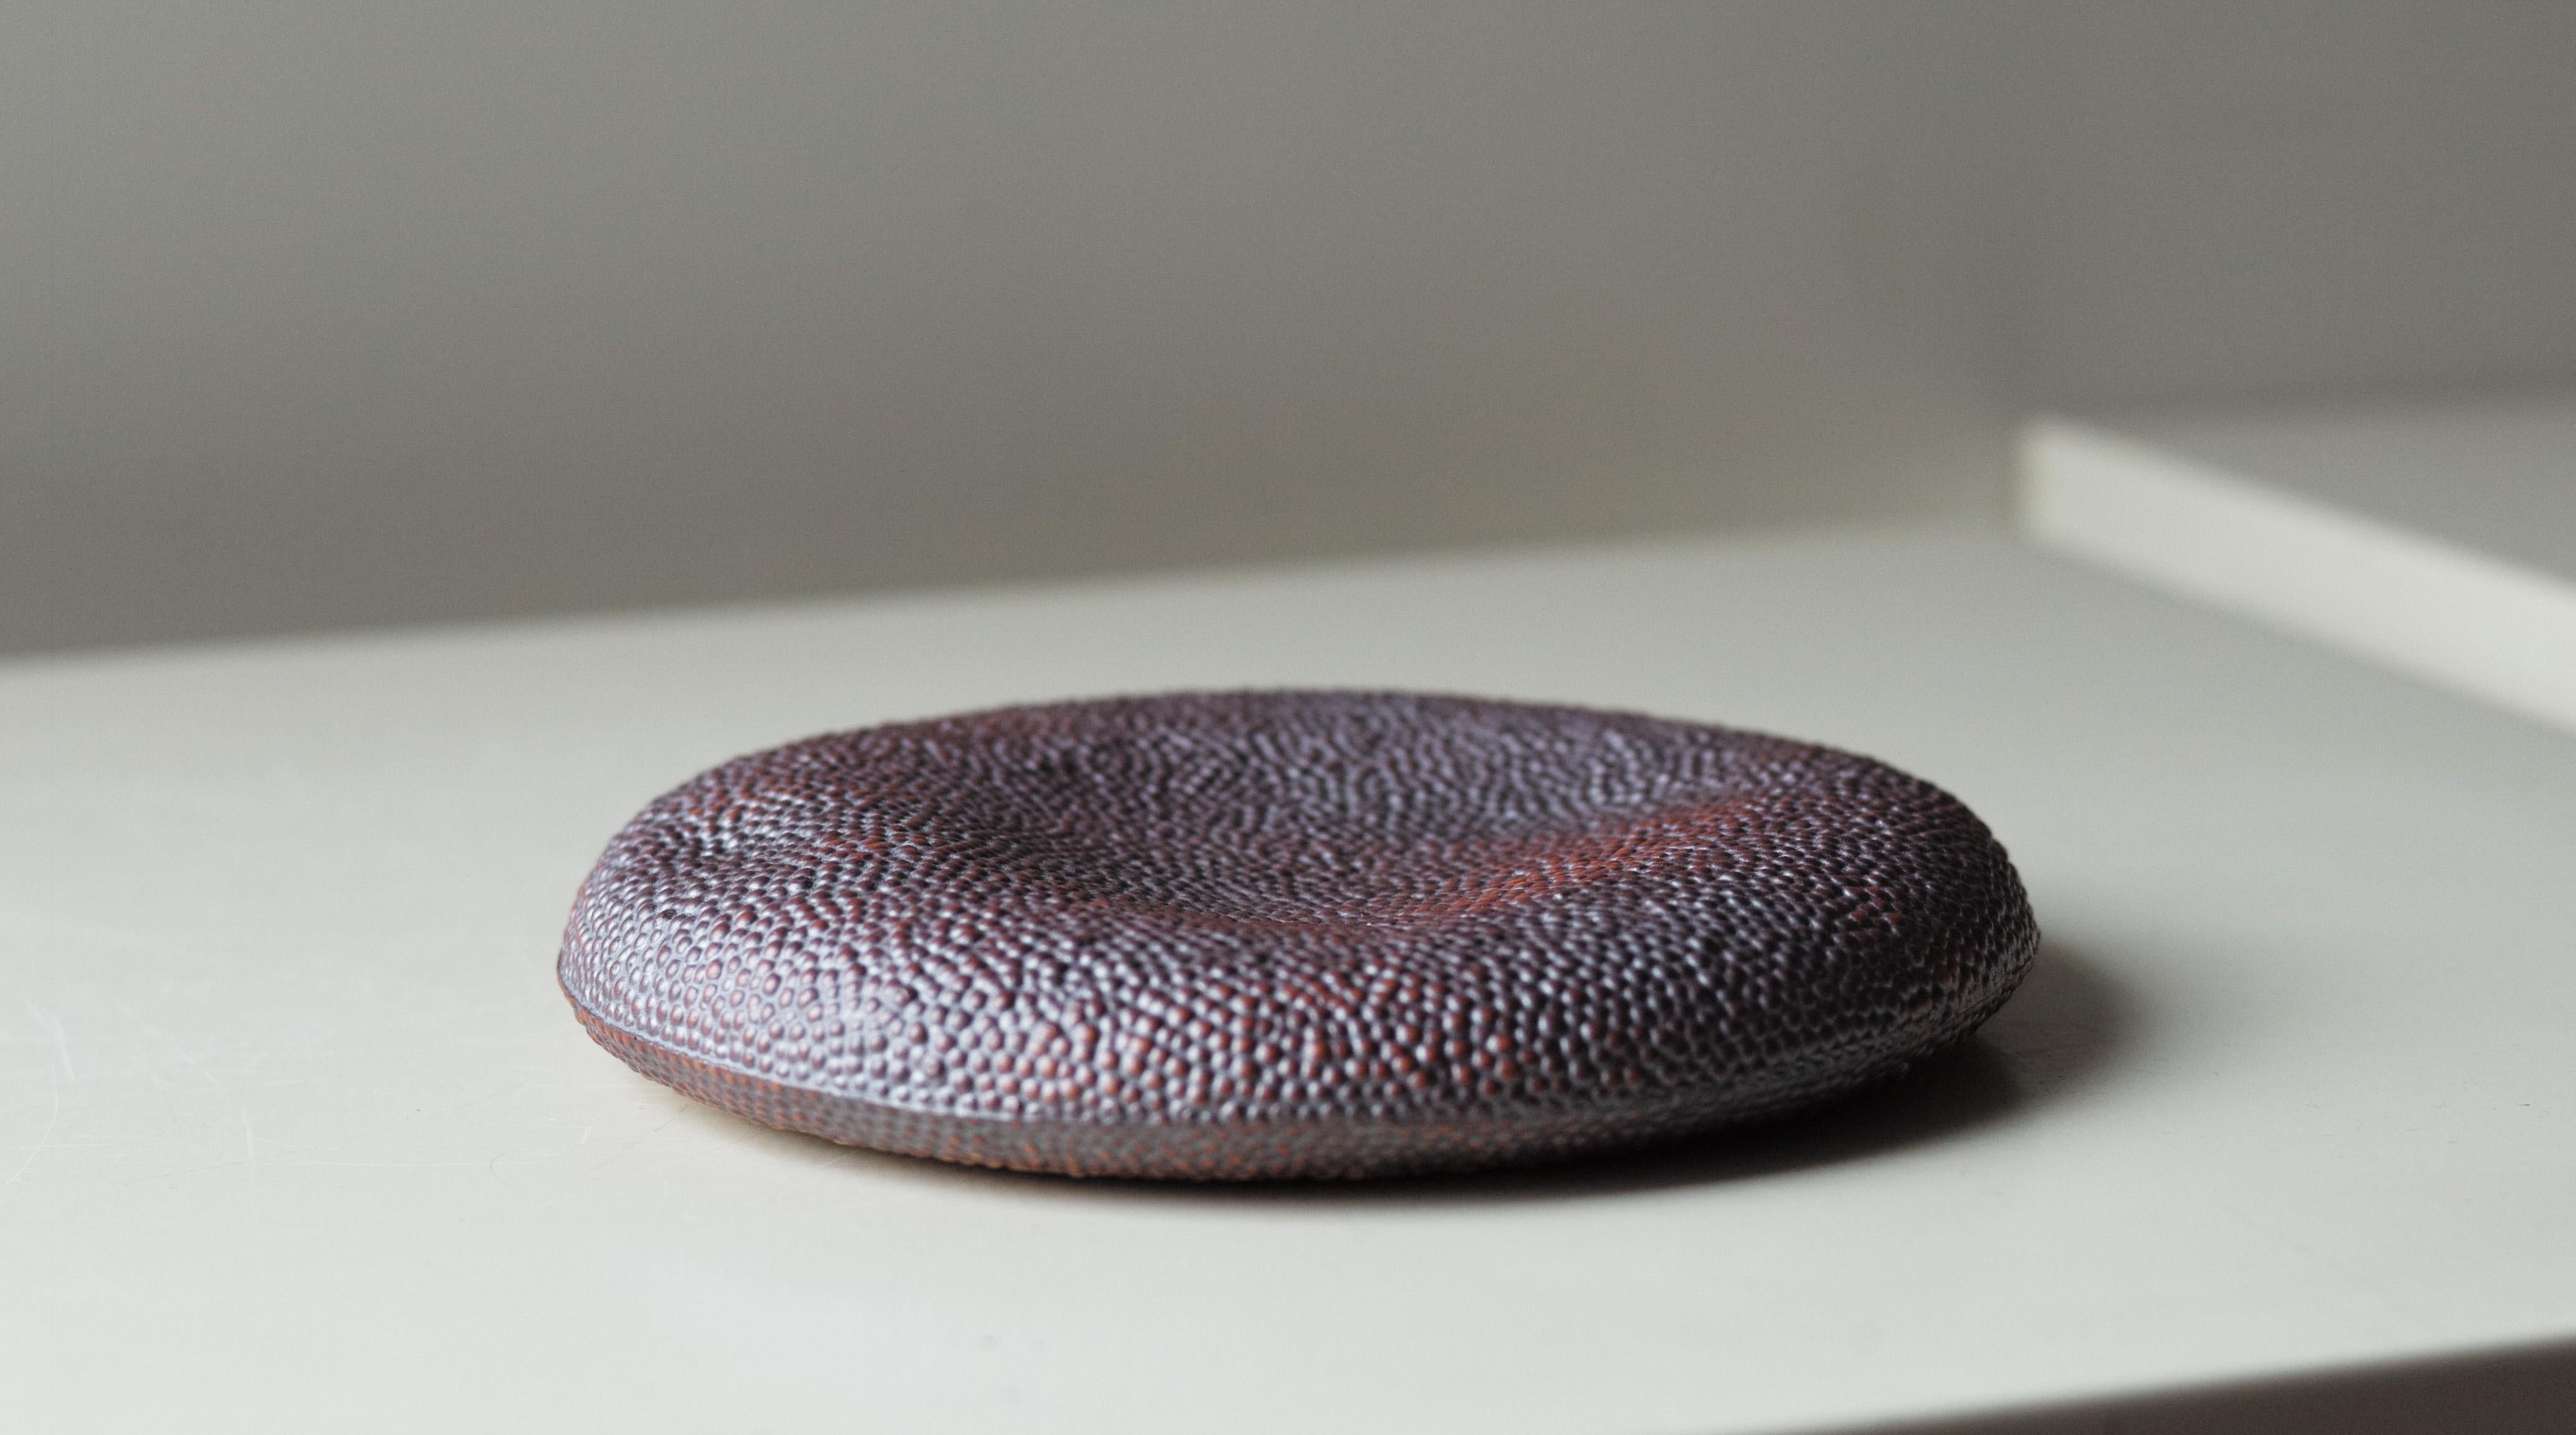 American Caviar Texture Porcelain Puff, Contemporary Object / Sculpture by Lana Kova